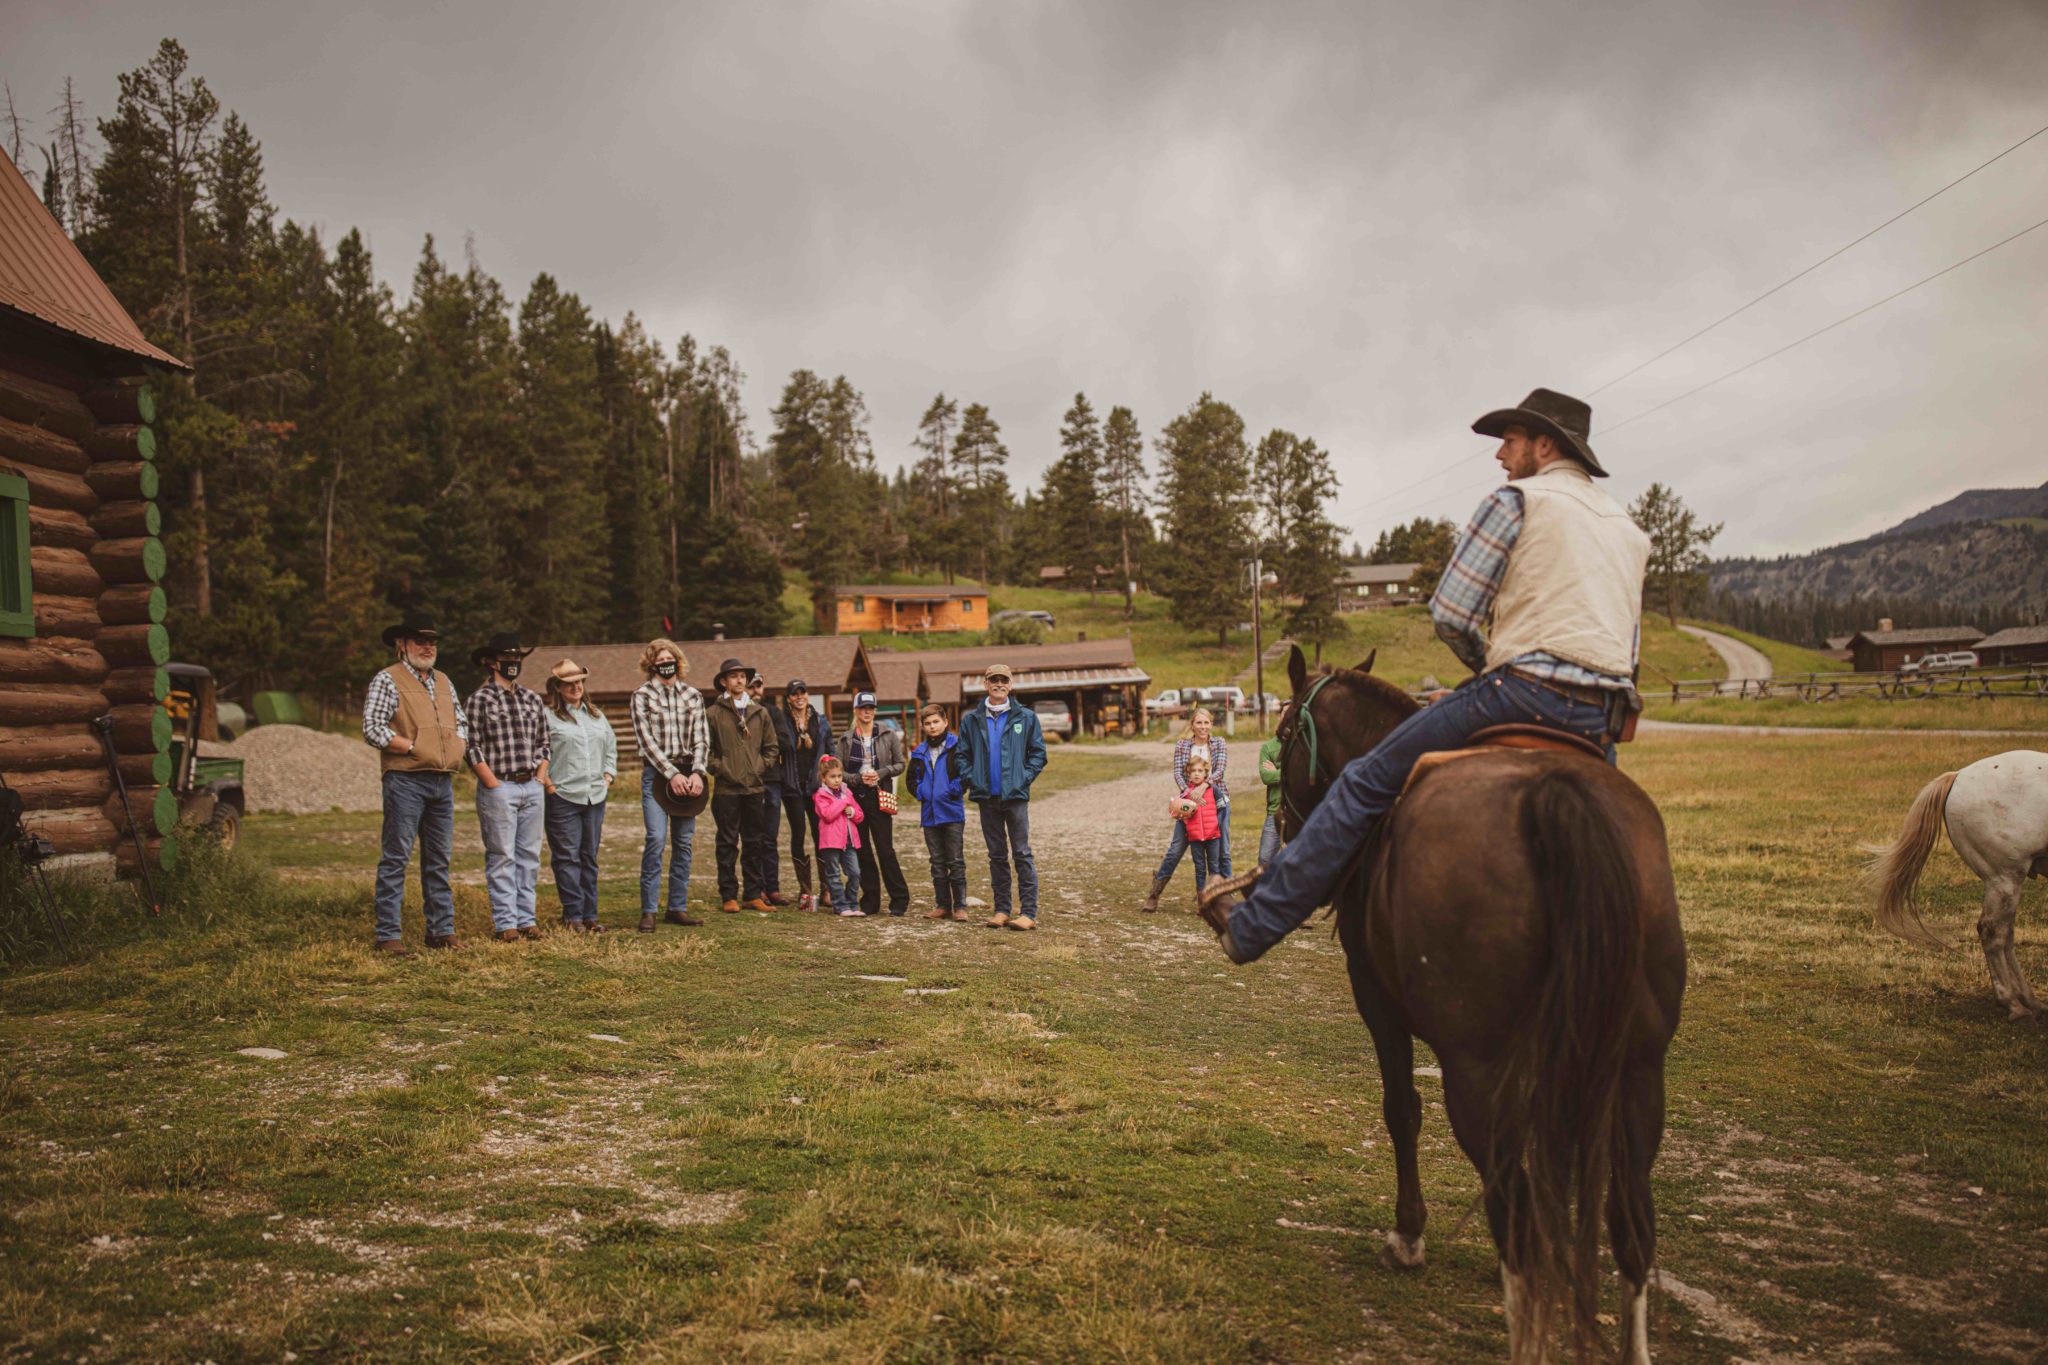 Ranch caretaker jobs in montana